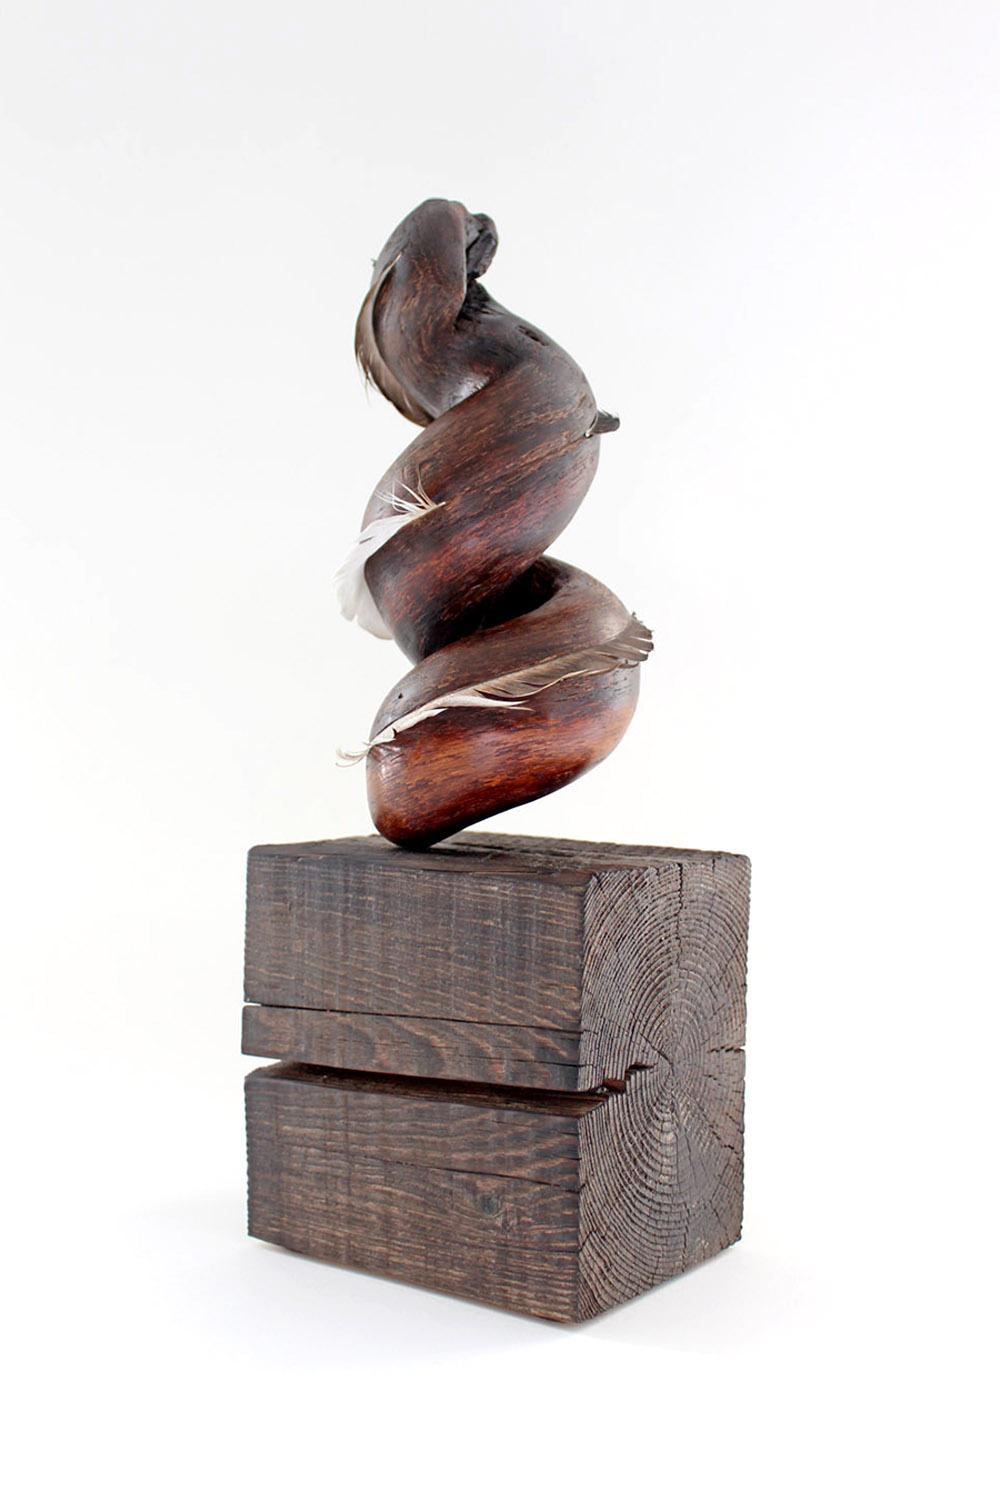 "Whispering Dervish", wood, white oak, feather, hemlock, brown, red, sculpture